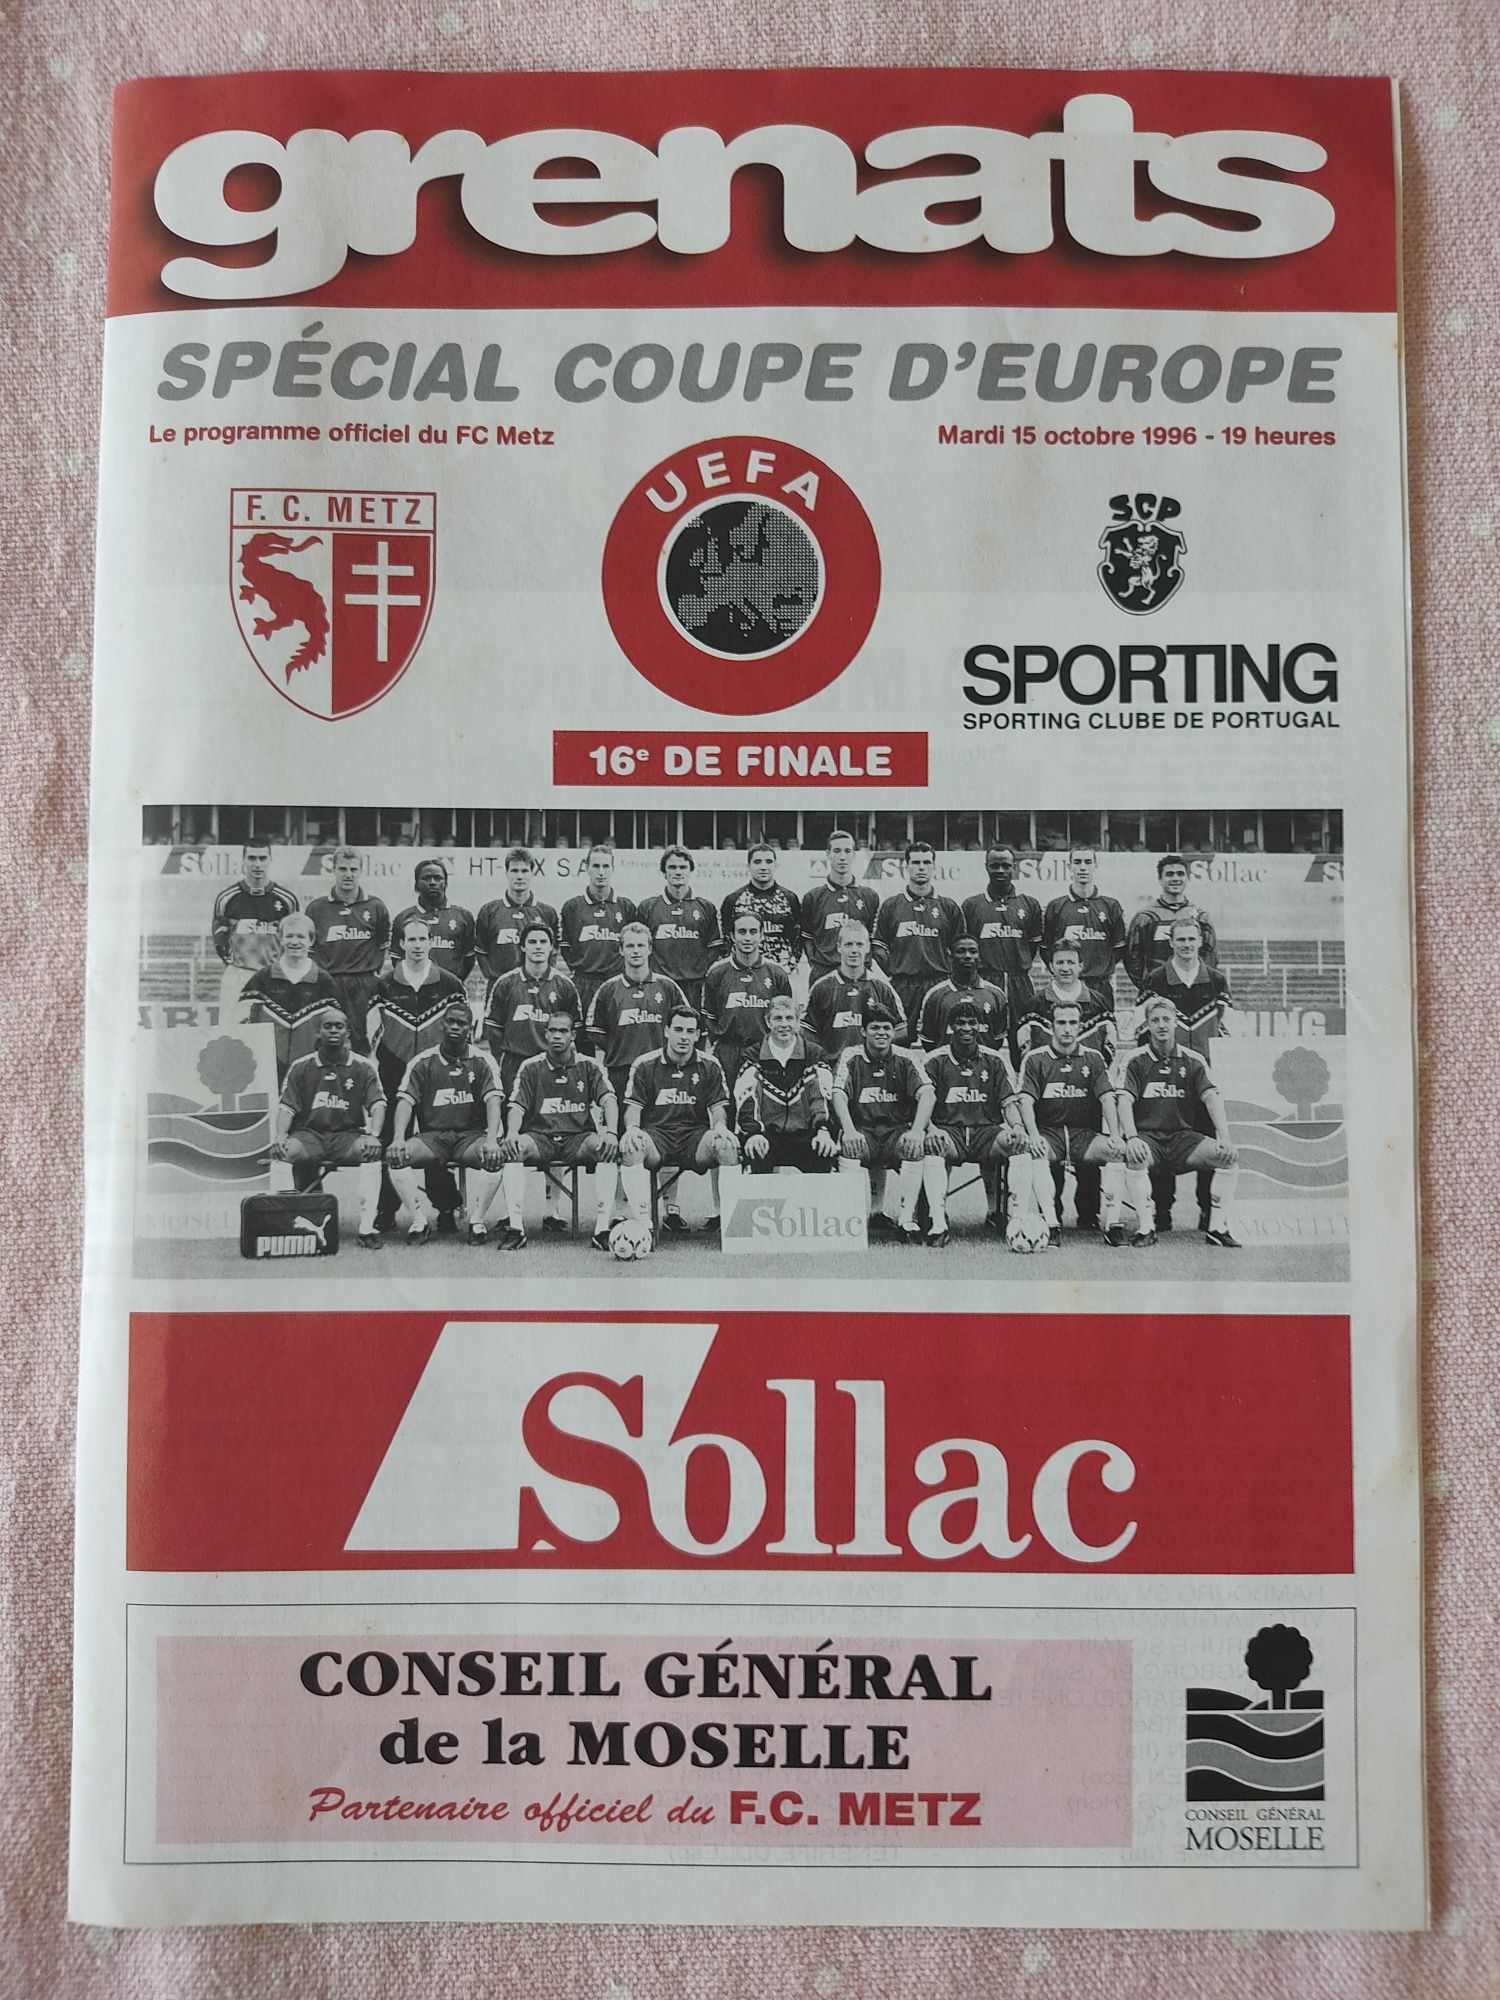 Programa oficial Metz Sporting UEFA 1996/97